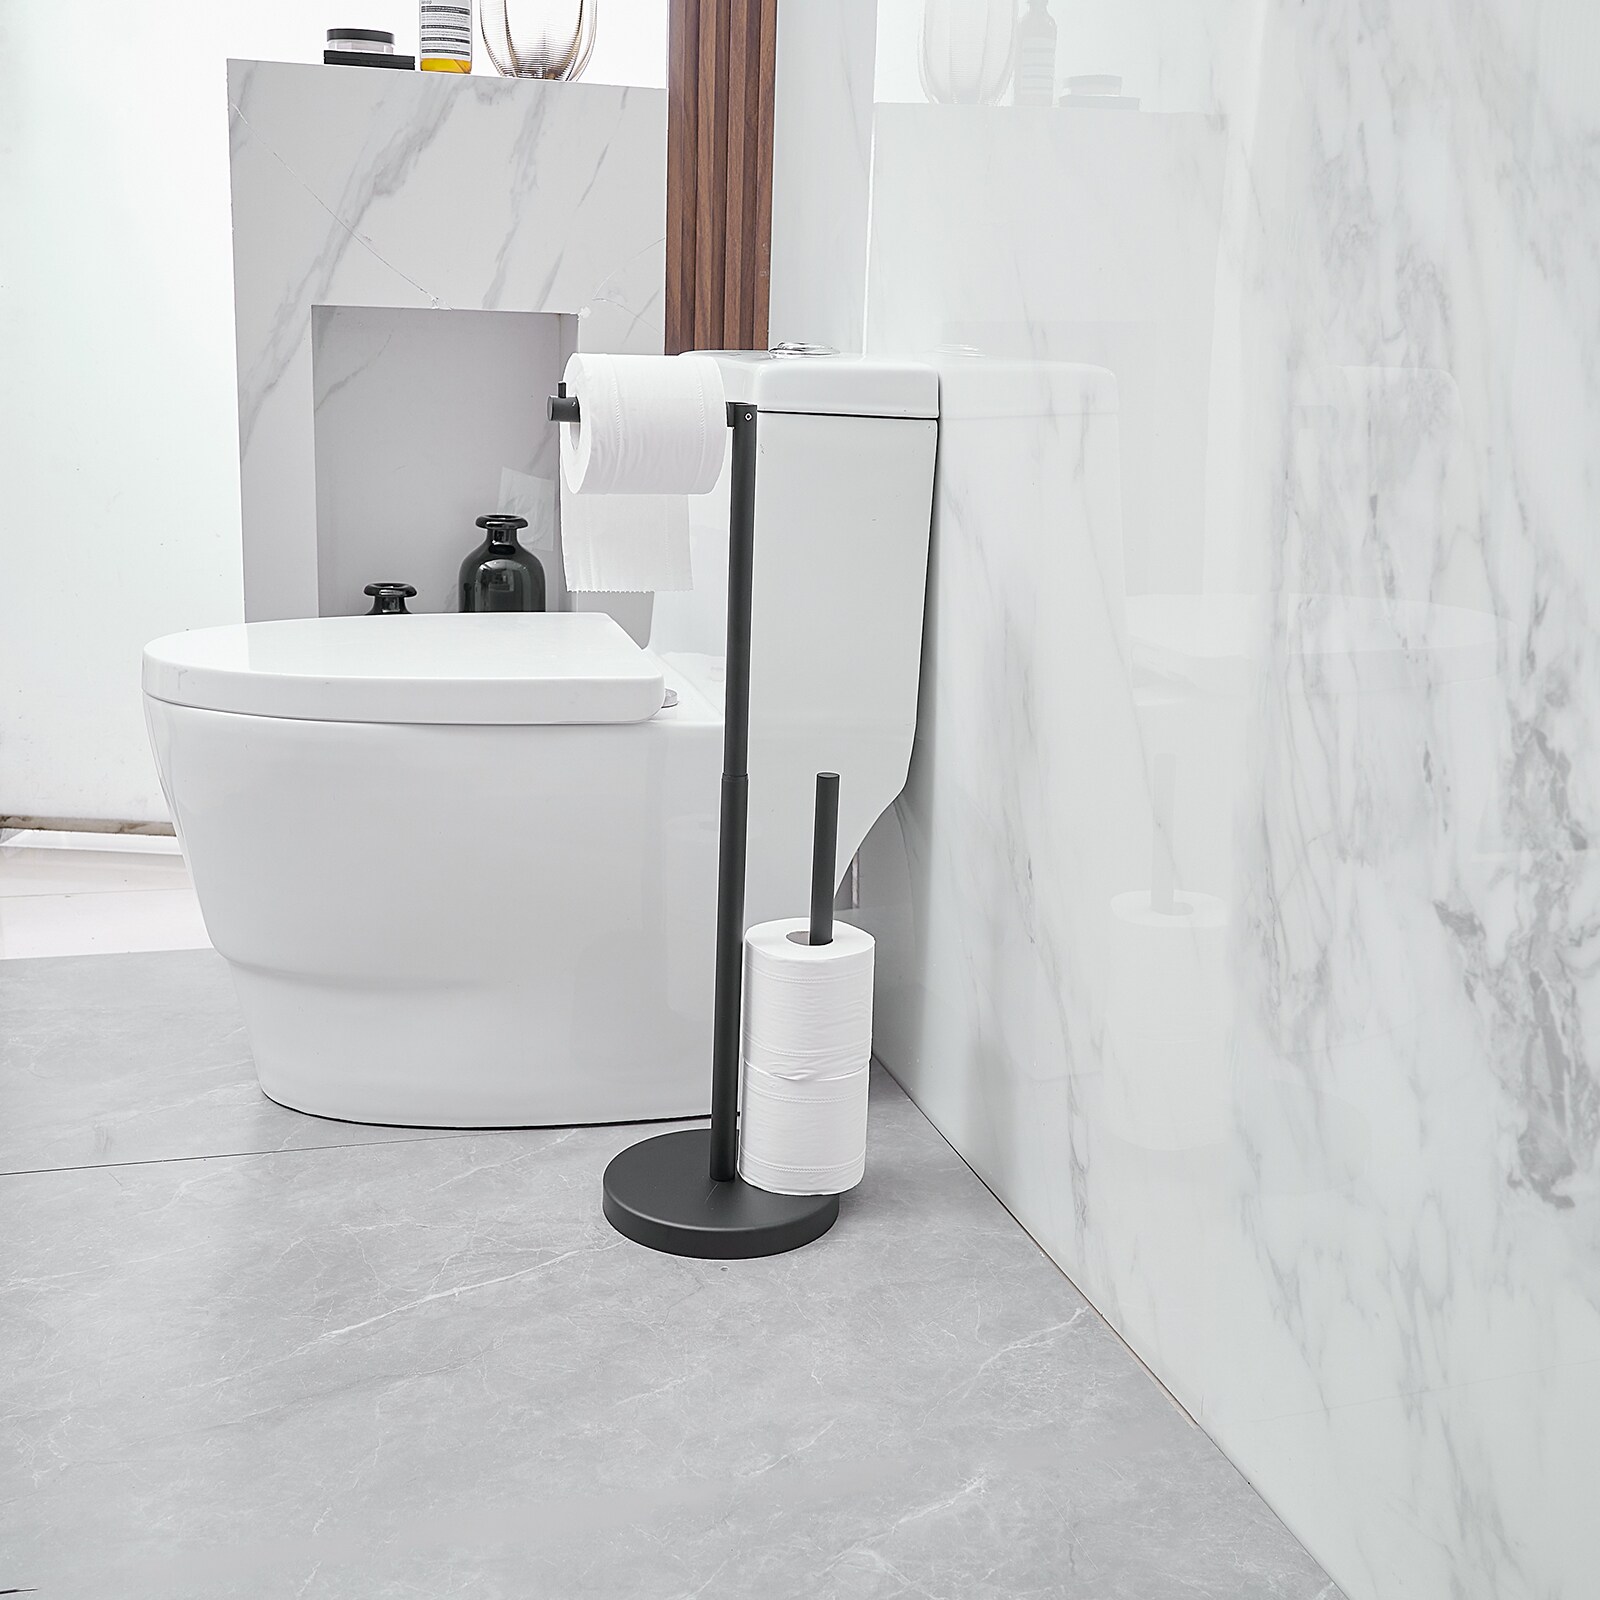 BWE A-91016 Toilet Paper Holder Matte Black Freestanding Single